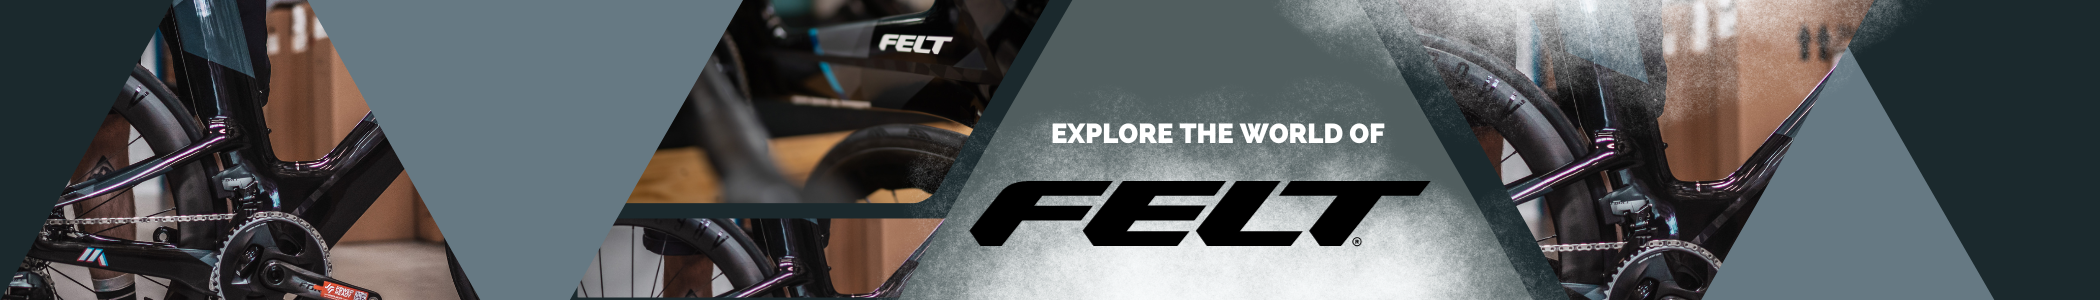 Explore the world of Felt!